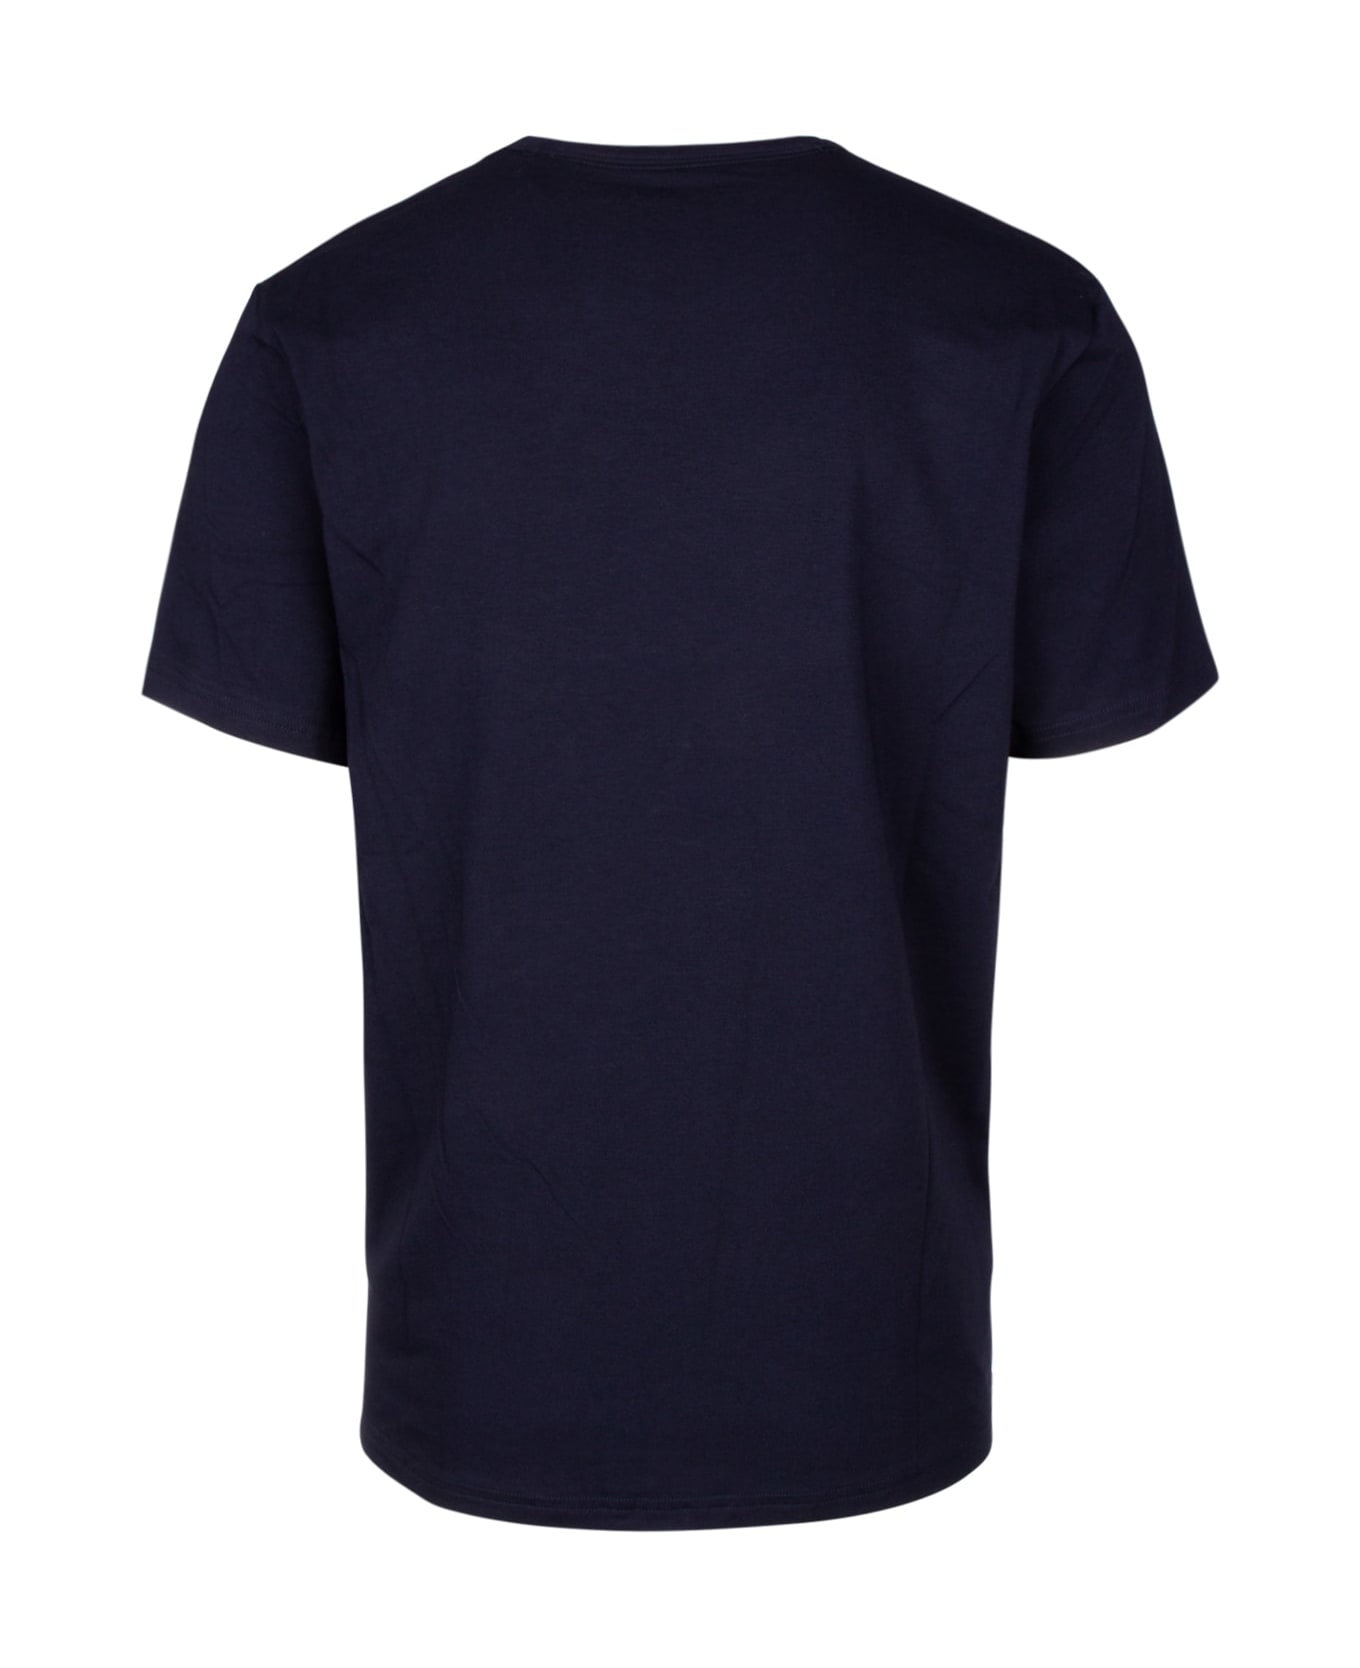 Calvin Klein T-shirt - CHW